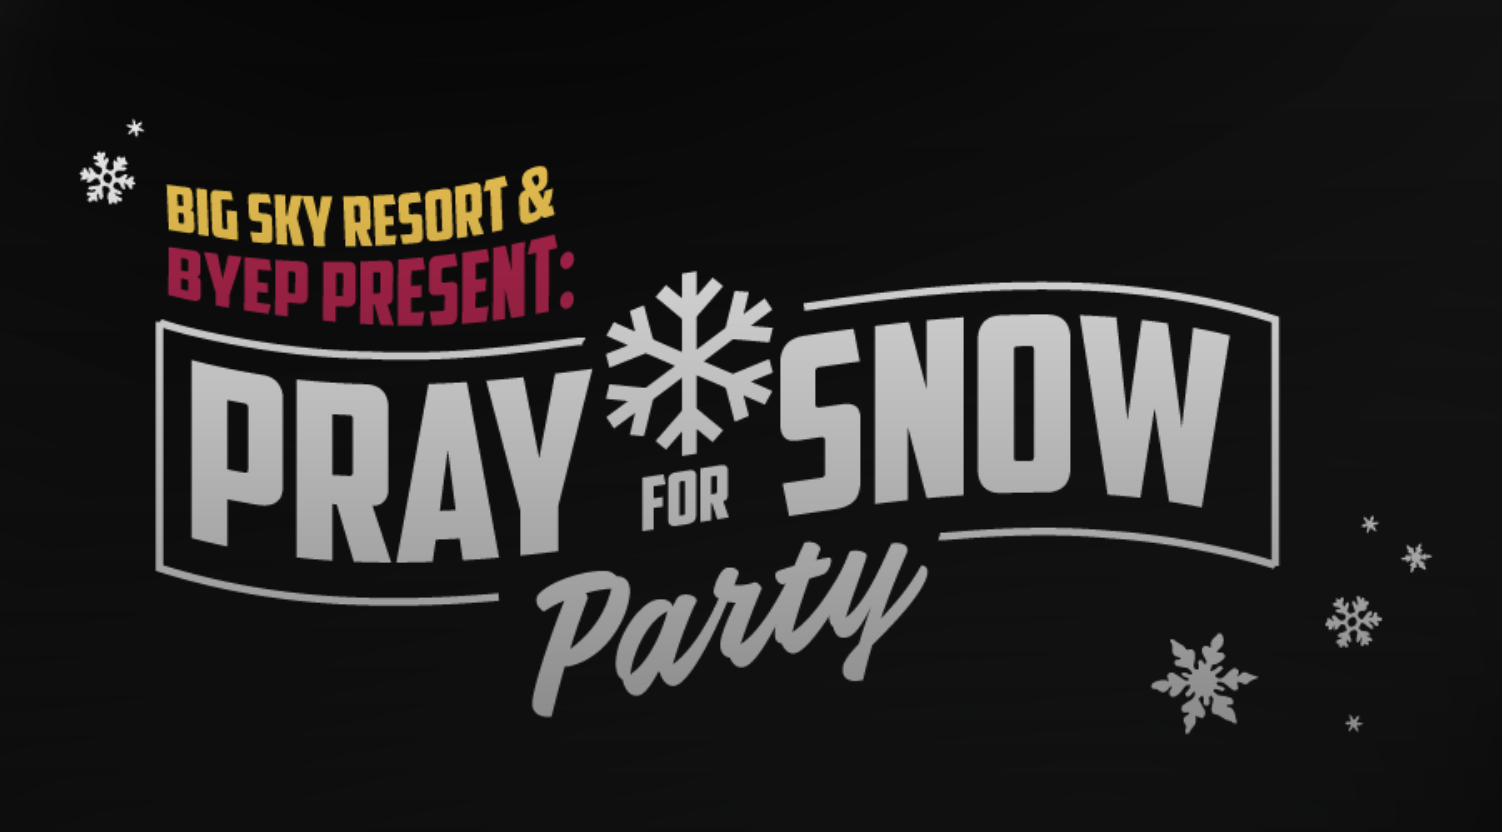 Pray for Snow Party in Bozeman, Montana